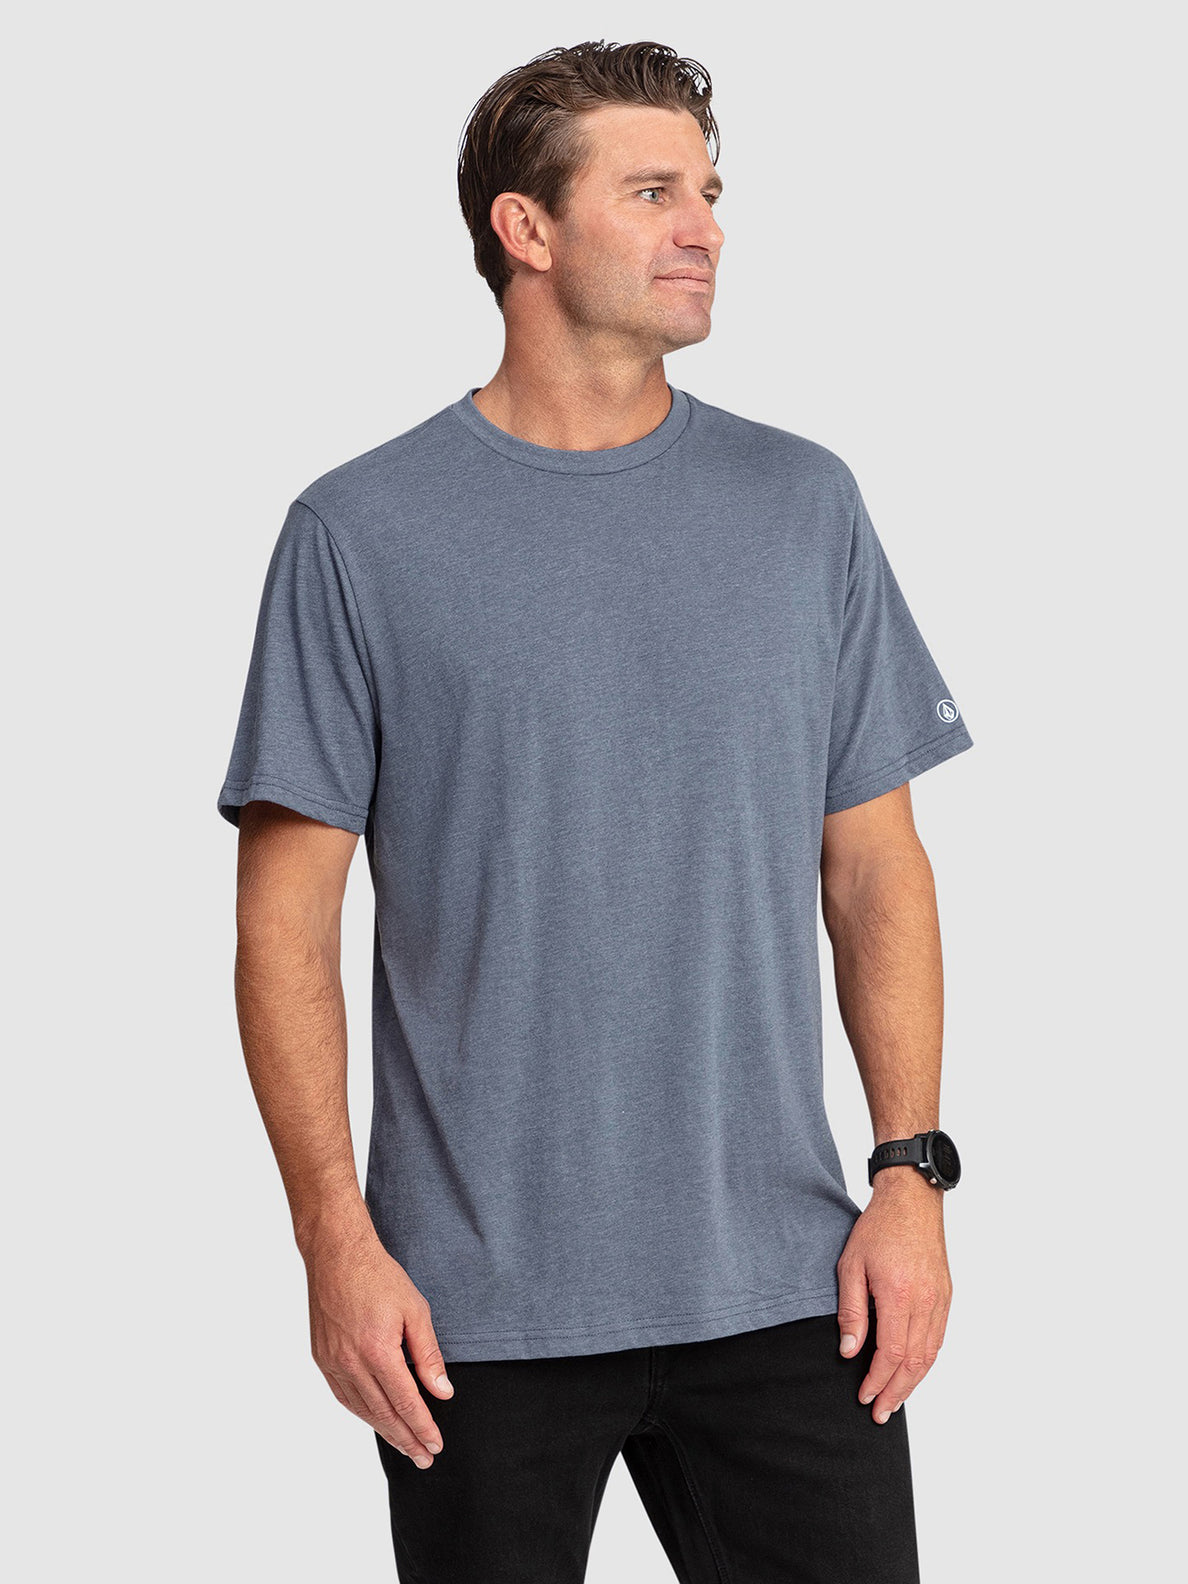 Aus Solid Short Sleeve Tee Shirt - Smokey Blue